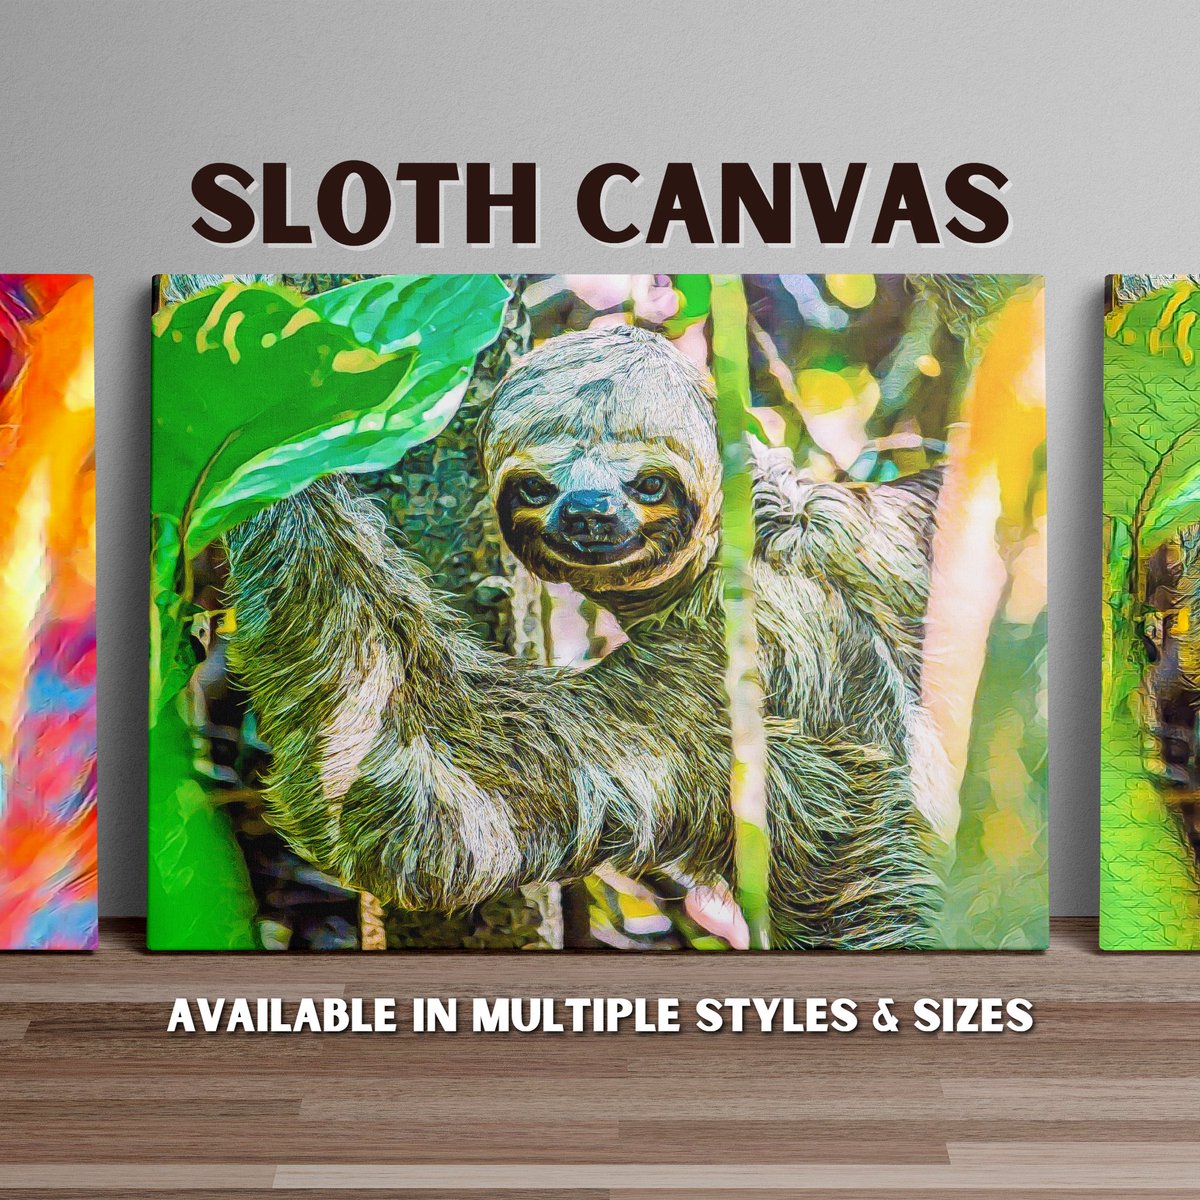 Sloth Canvas Wall Art Print

etsy.com/listing/140640…

#sloth #amazon #peru #canvaswallart #travelprint #travelgift #traveldecor